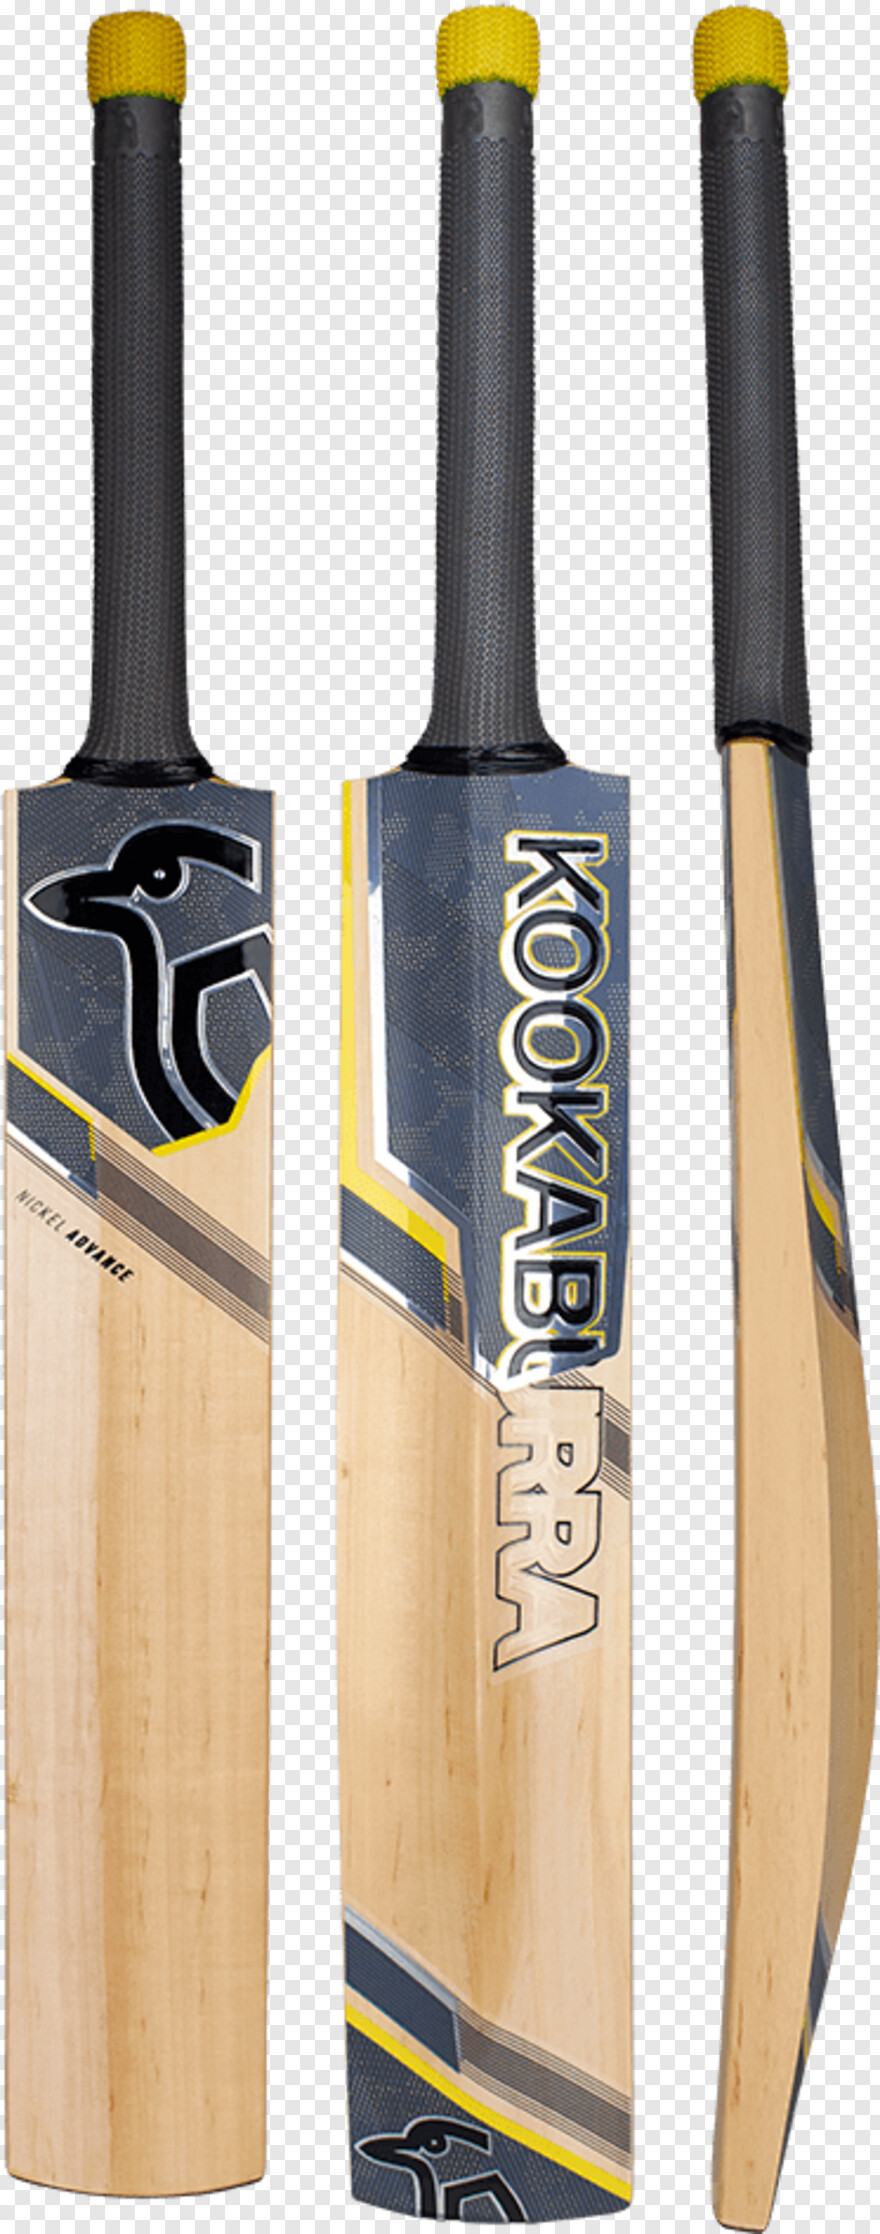  Cricket Cup, Cricket Vector, Cricket Bat And Ball, Cricket Kit, Cricket Clipart, Cricket Images